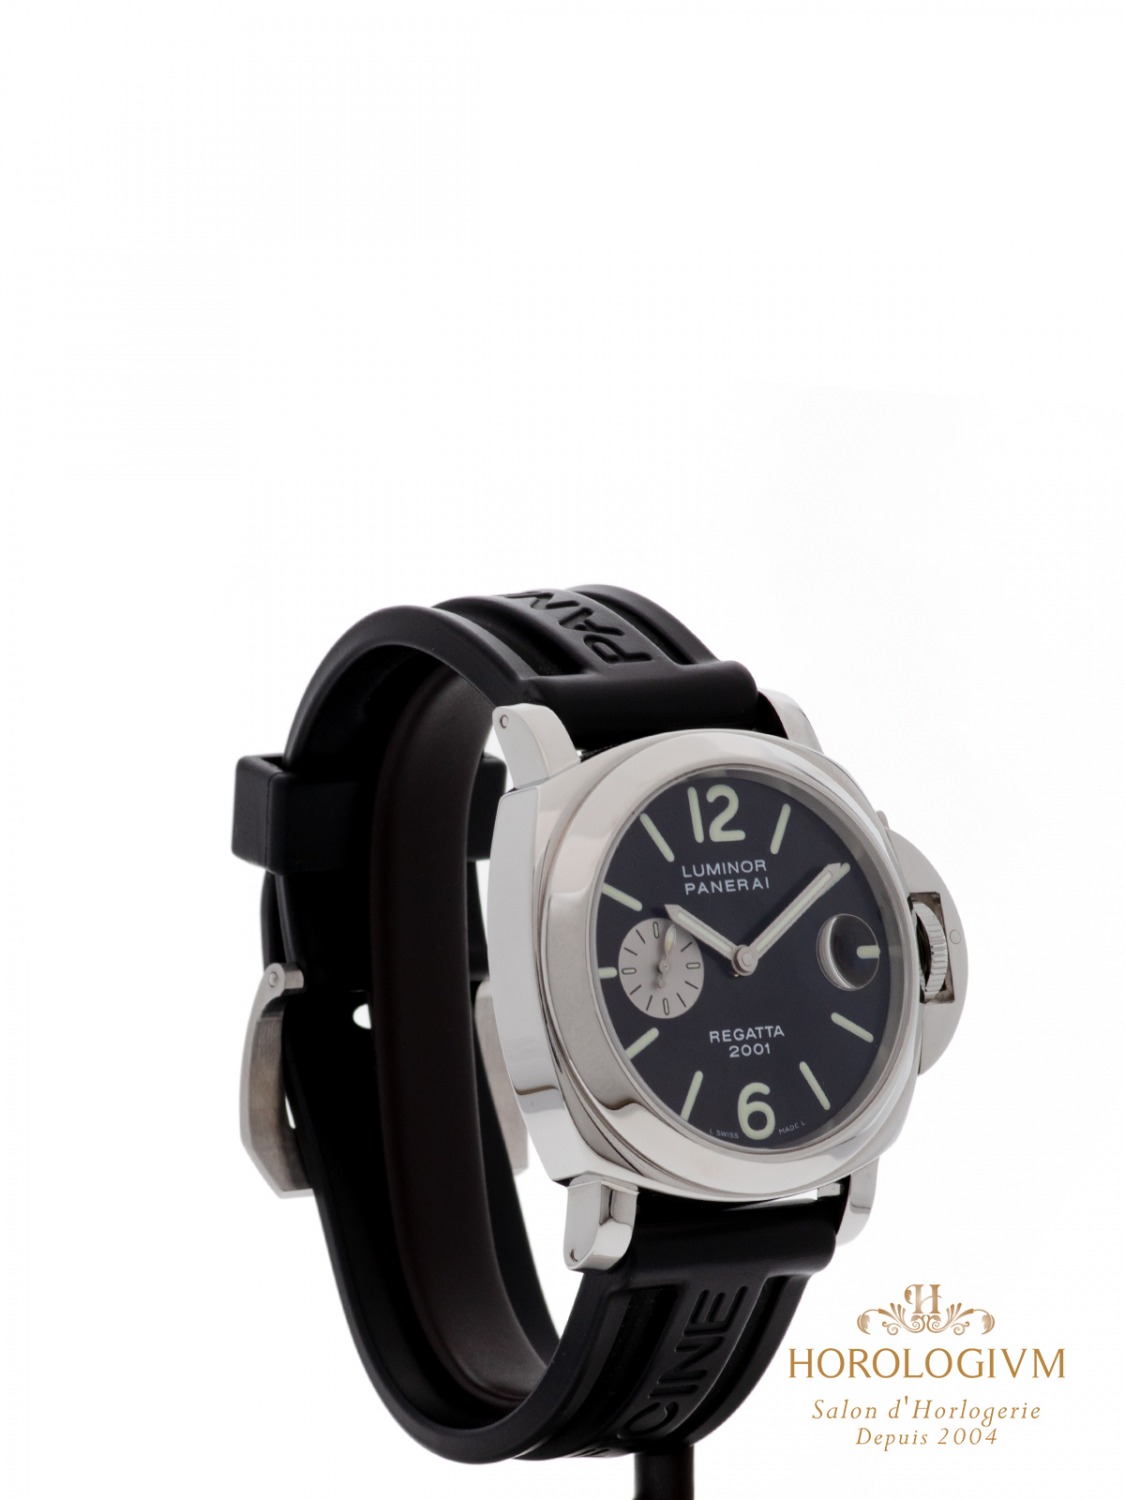 Panerai Luminor Regatta Special Edition 44MM Ref. PAM00107 watch, silver